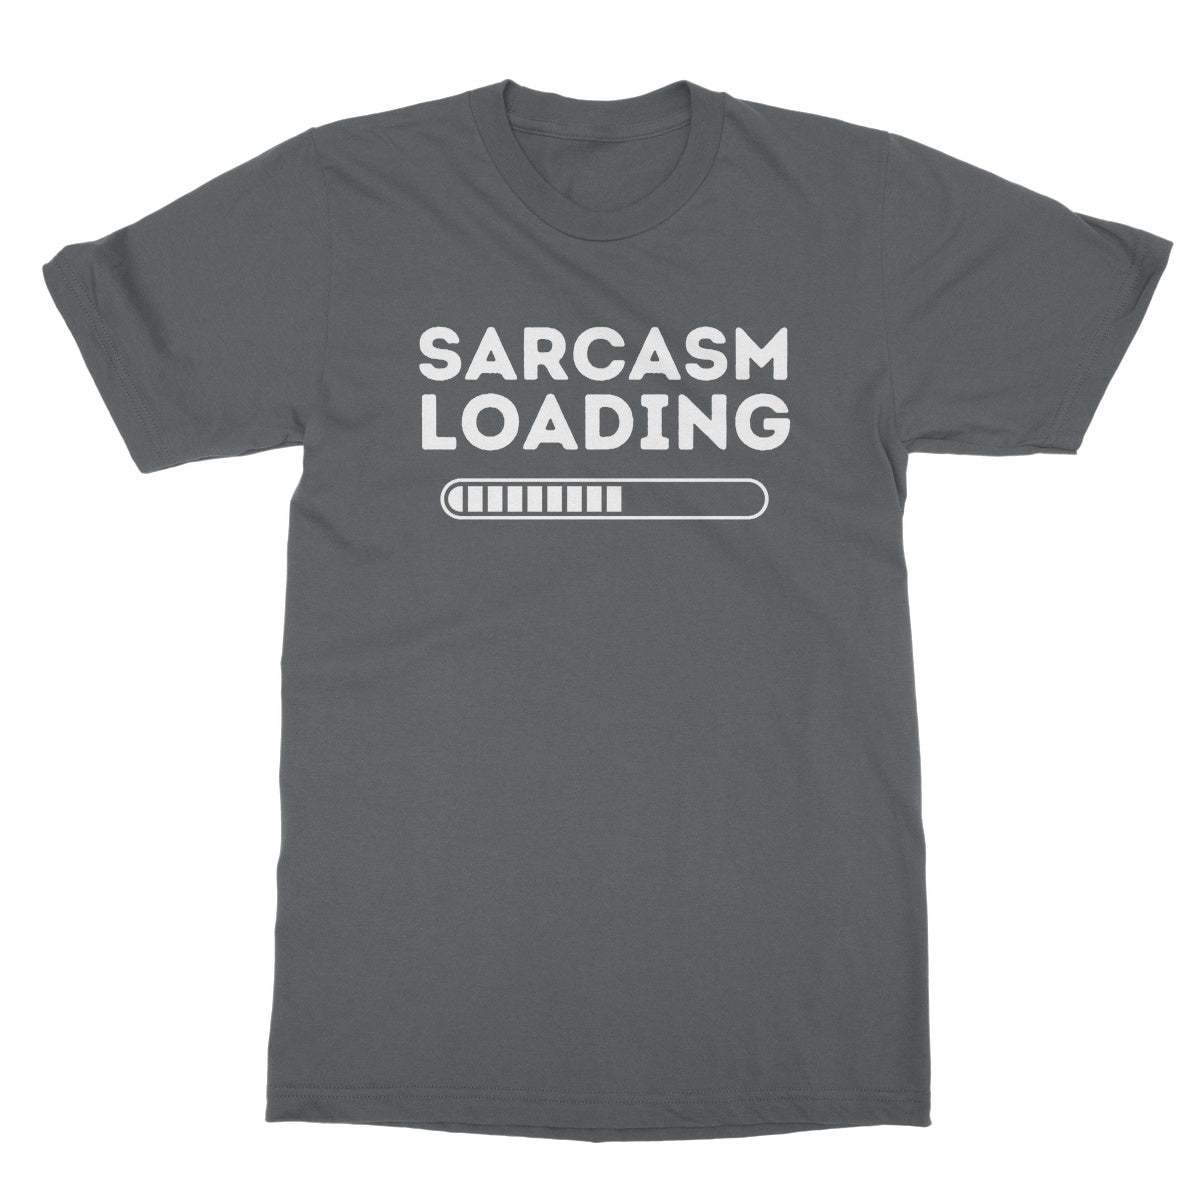 sarcasm loading t shirt grey